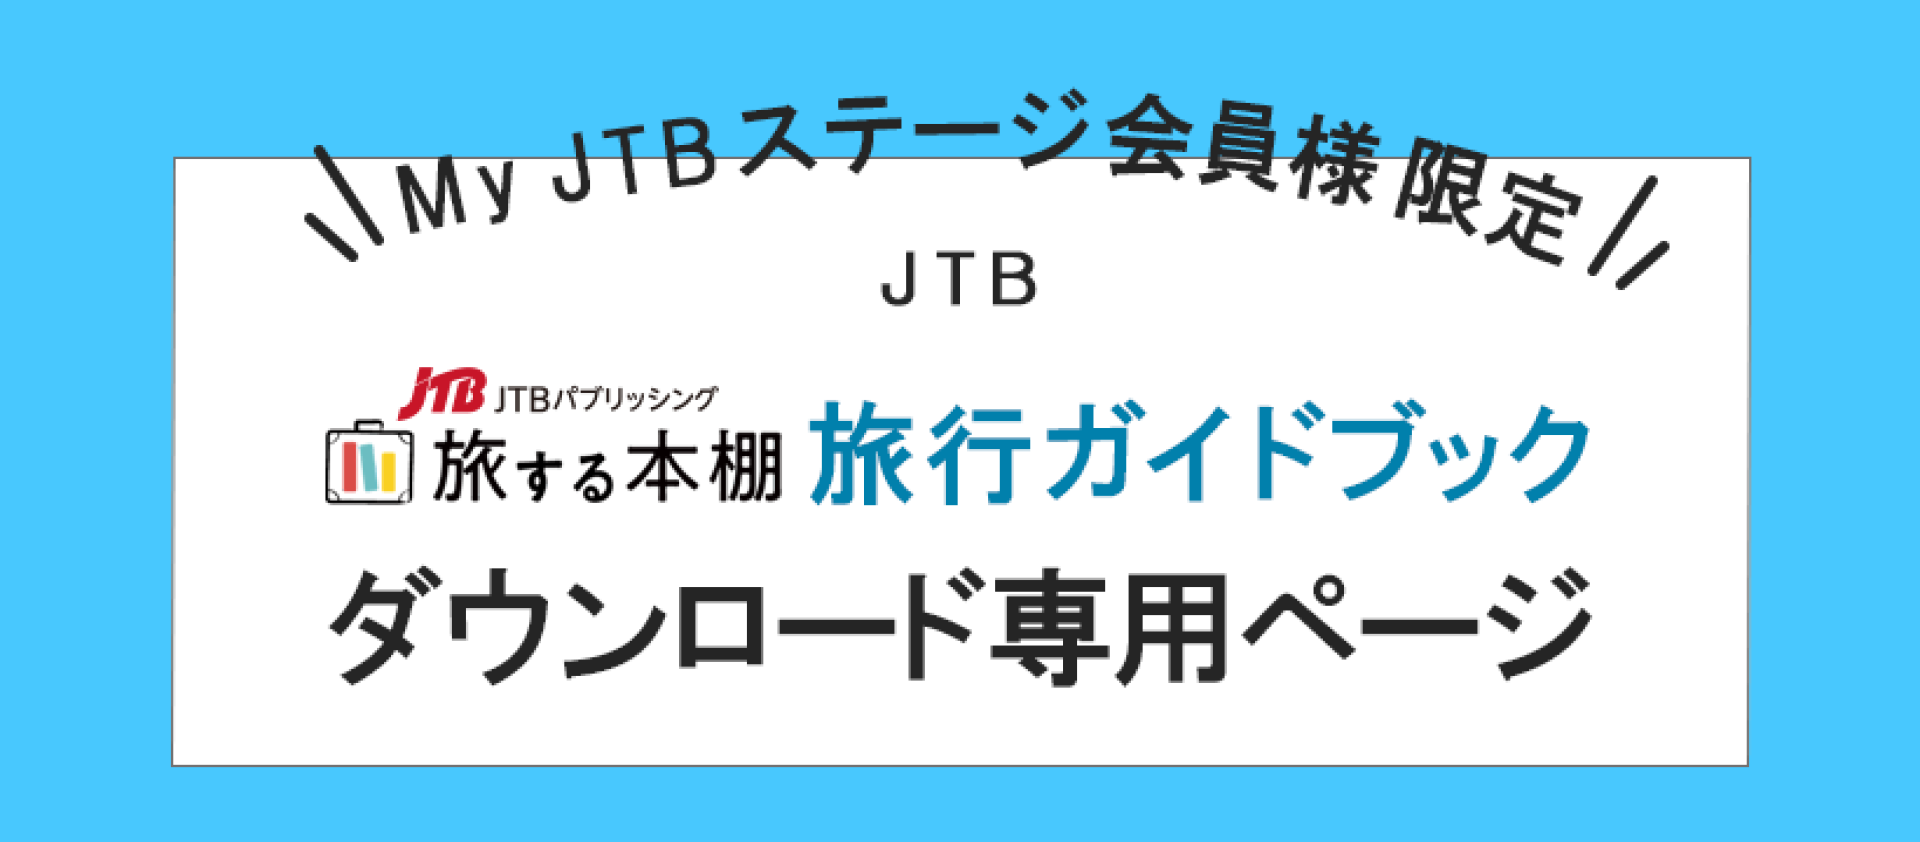 JTB MyJTBステージ会員様限定「旅する本棚」旅行ガイドブックダウンロード専用ページ